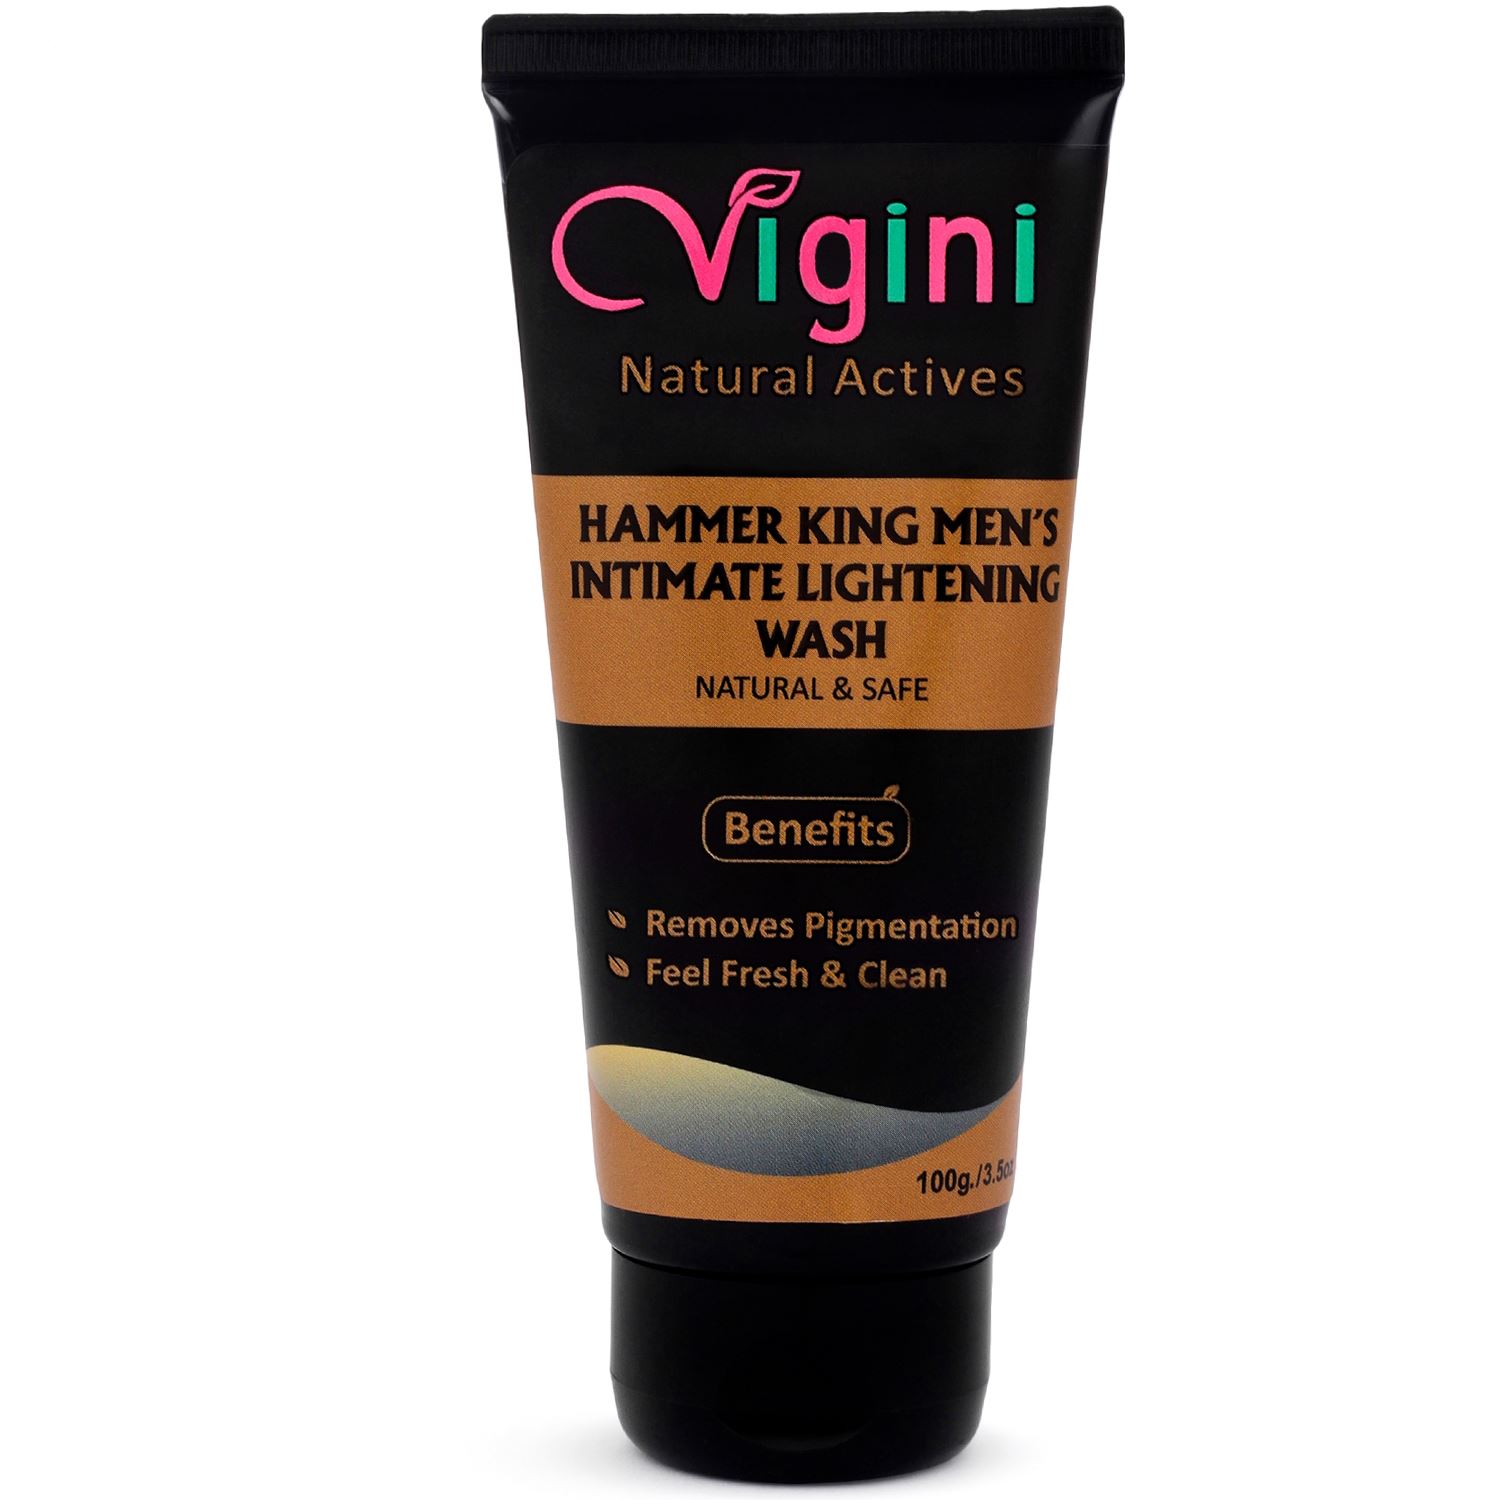 Vigini Hammer King Intimate Lightening Whitening Brightening Deodorant Gel Wash Men 100g